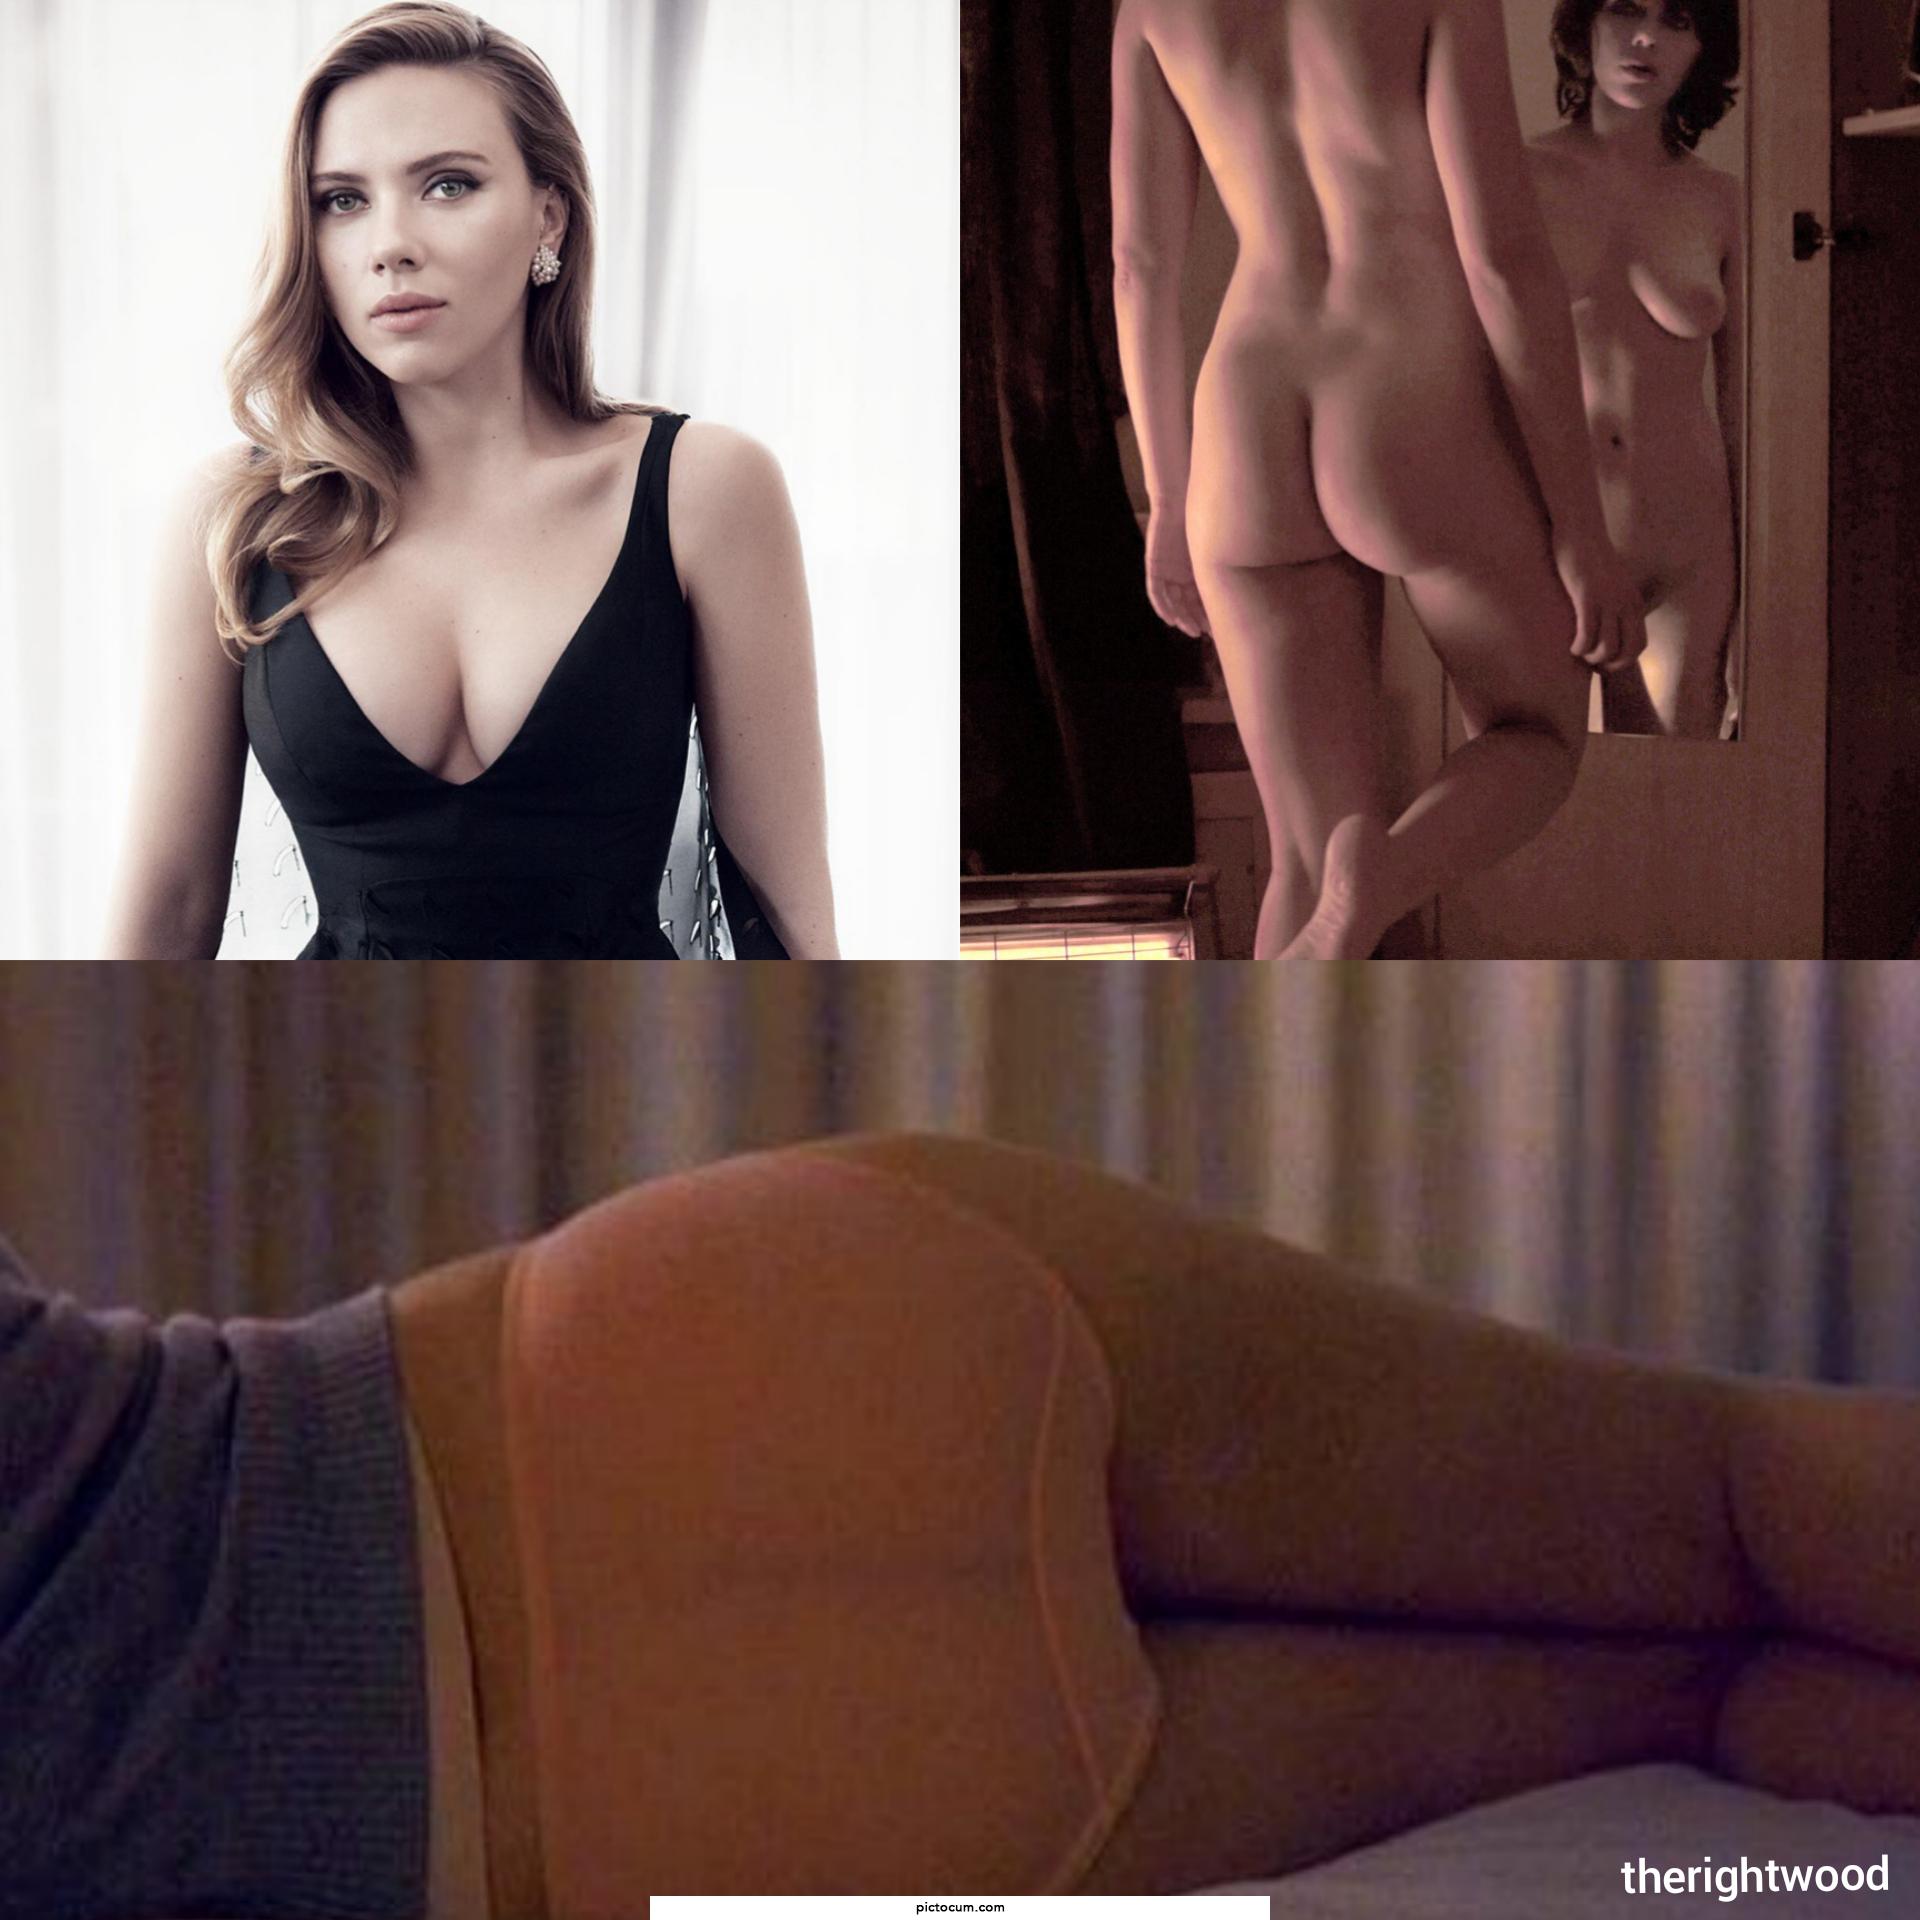 Scarlett Johansson is irresistible